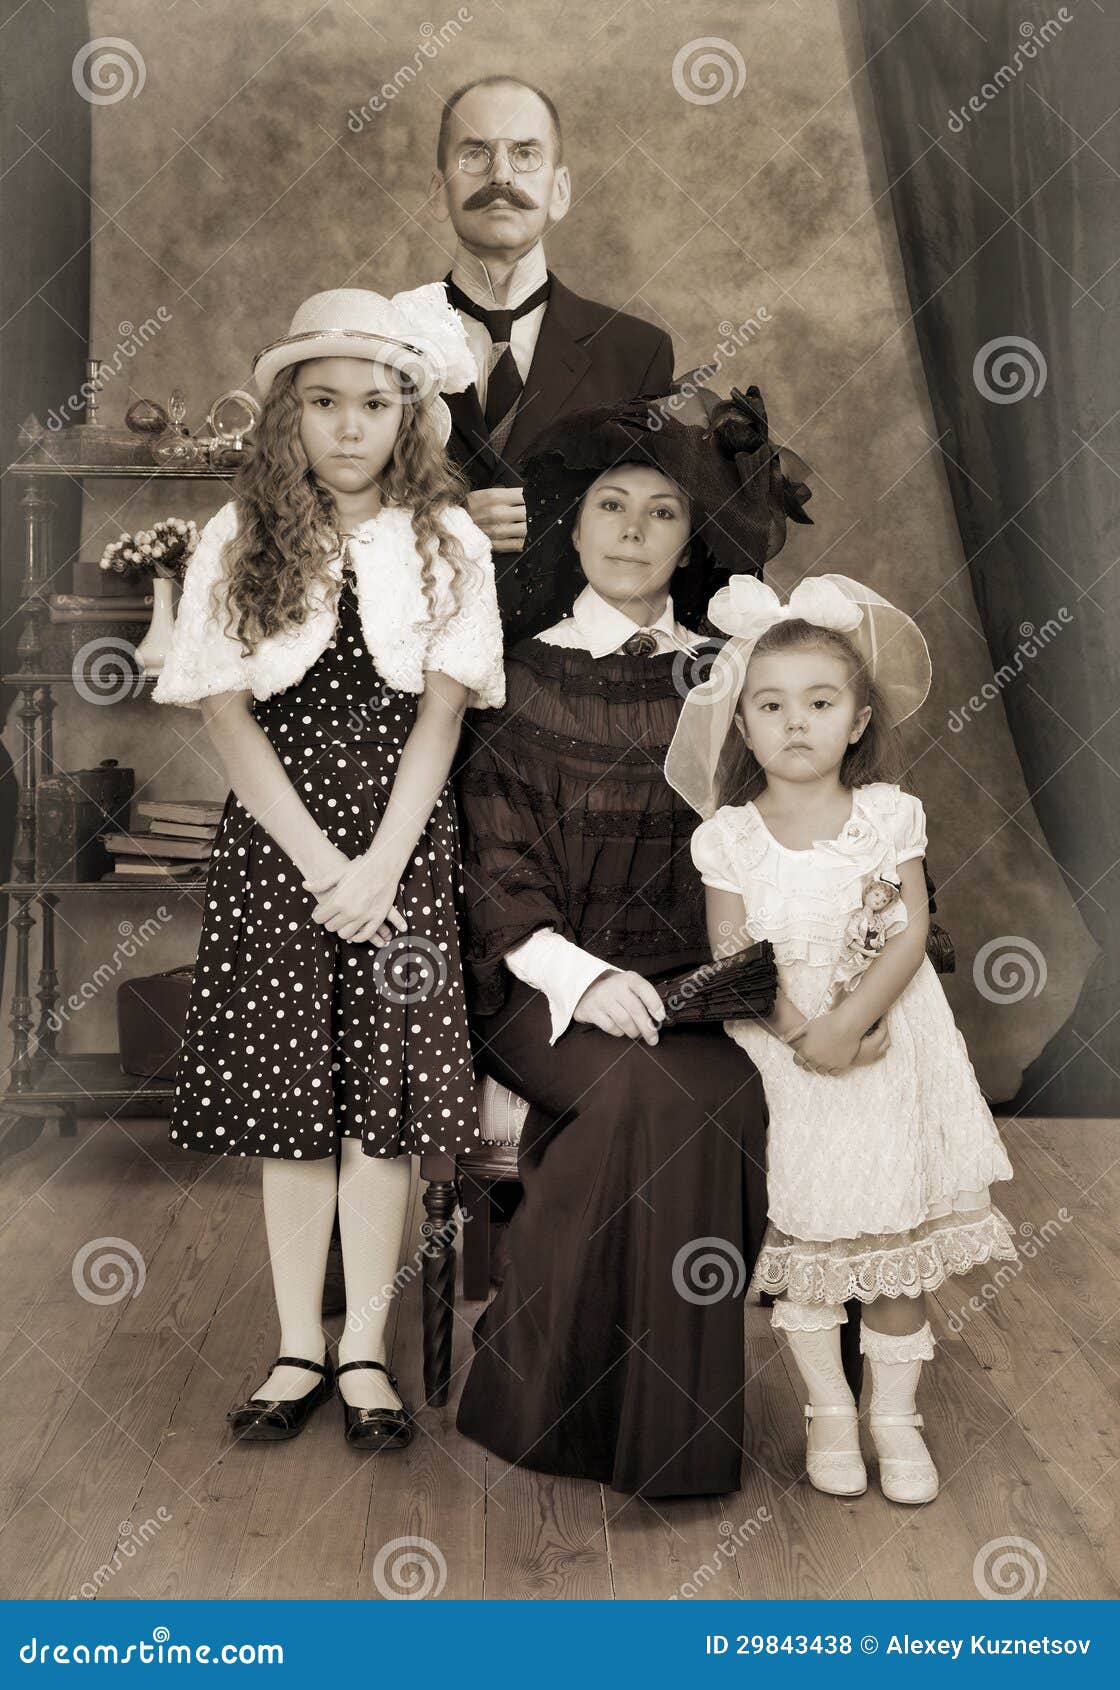 Retro family portrait stock photo. Image of antique, girls - 29843438